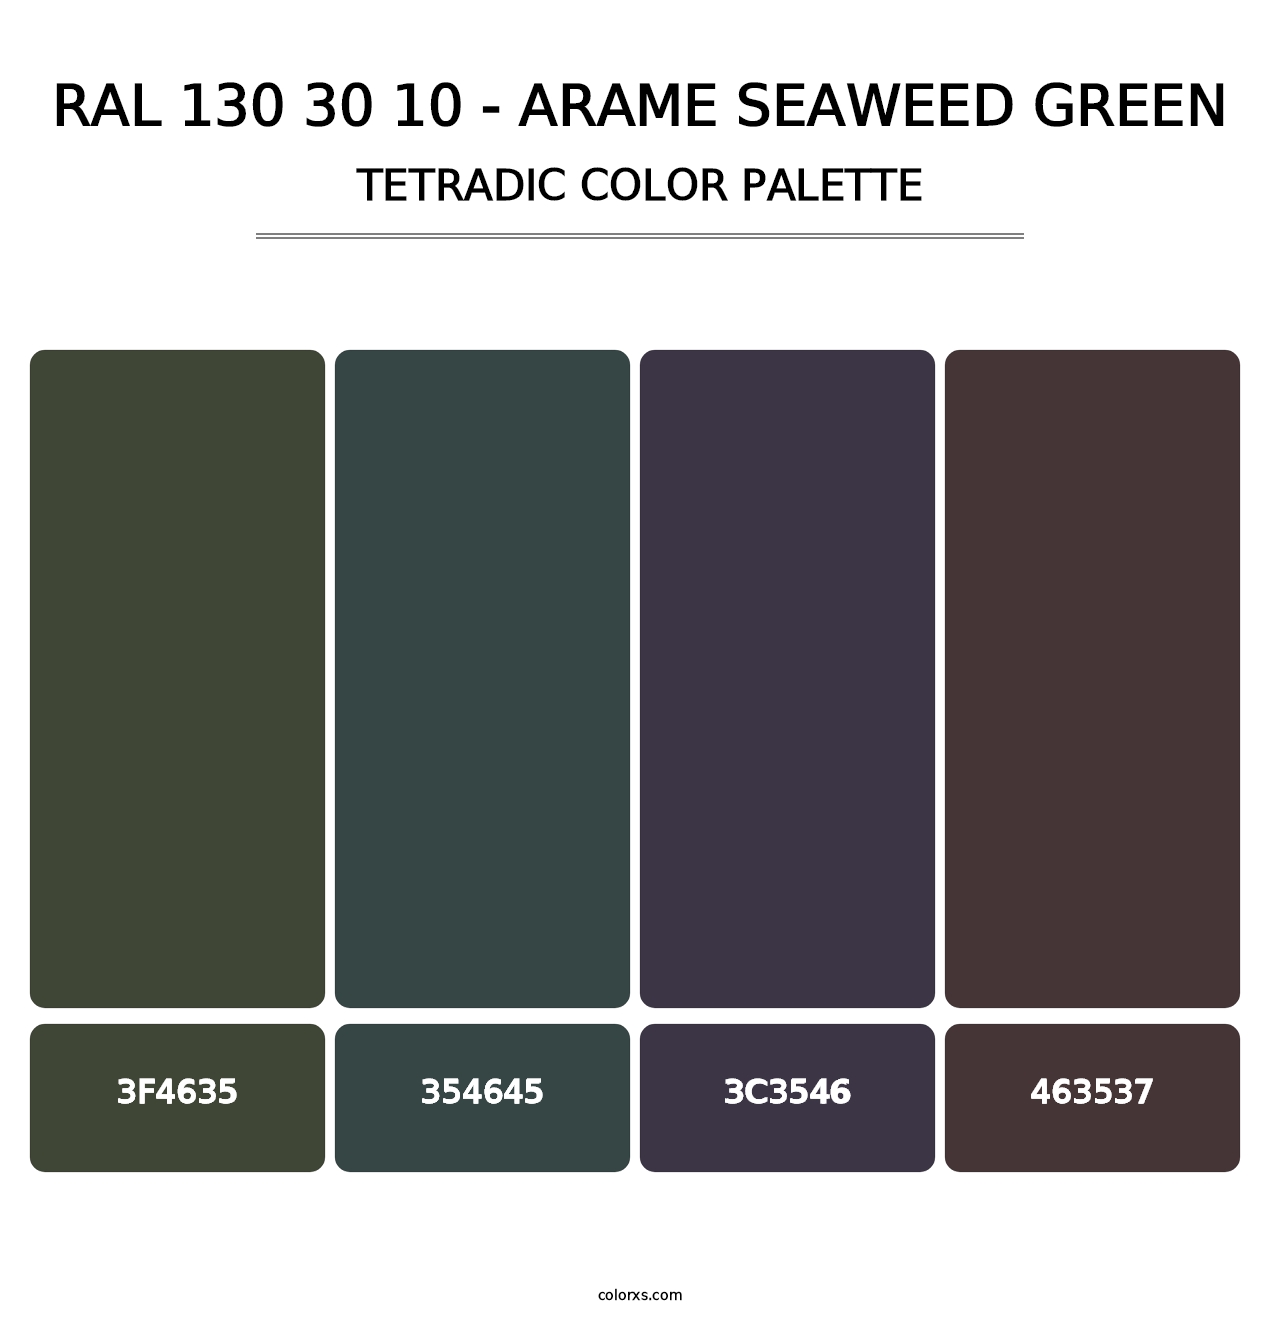 RAL 130 30 10 - Arame Seaweed Green - Tetradic Color Palette